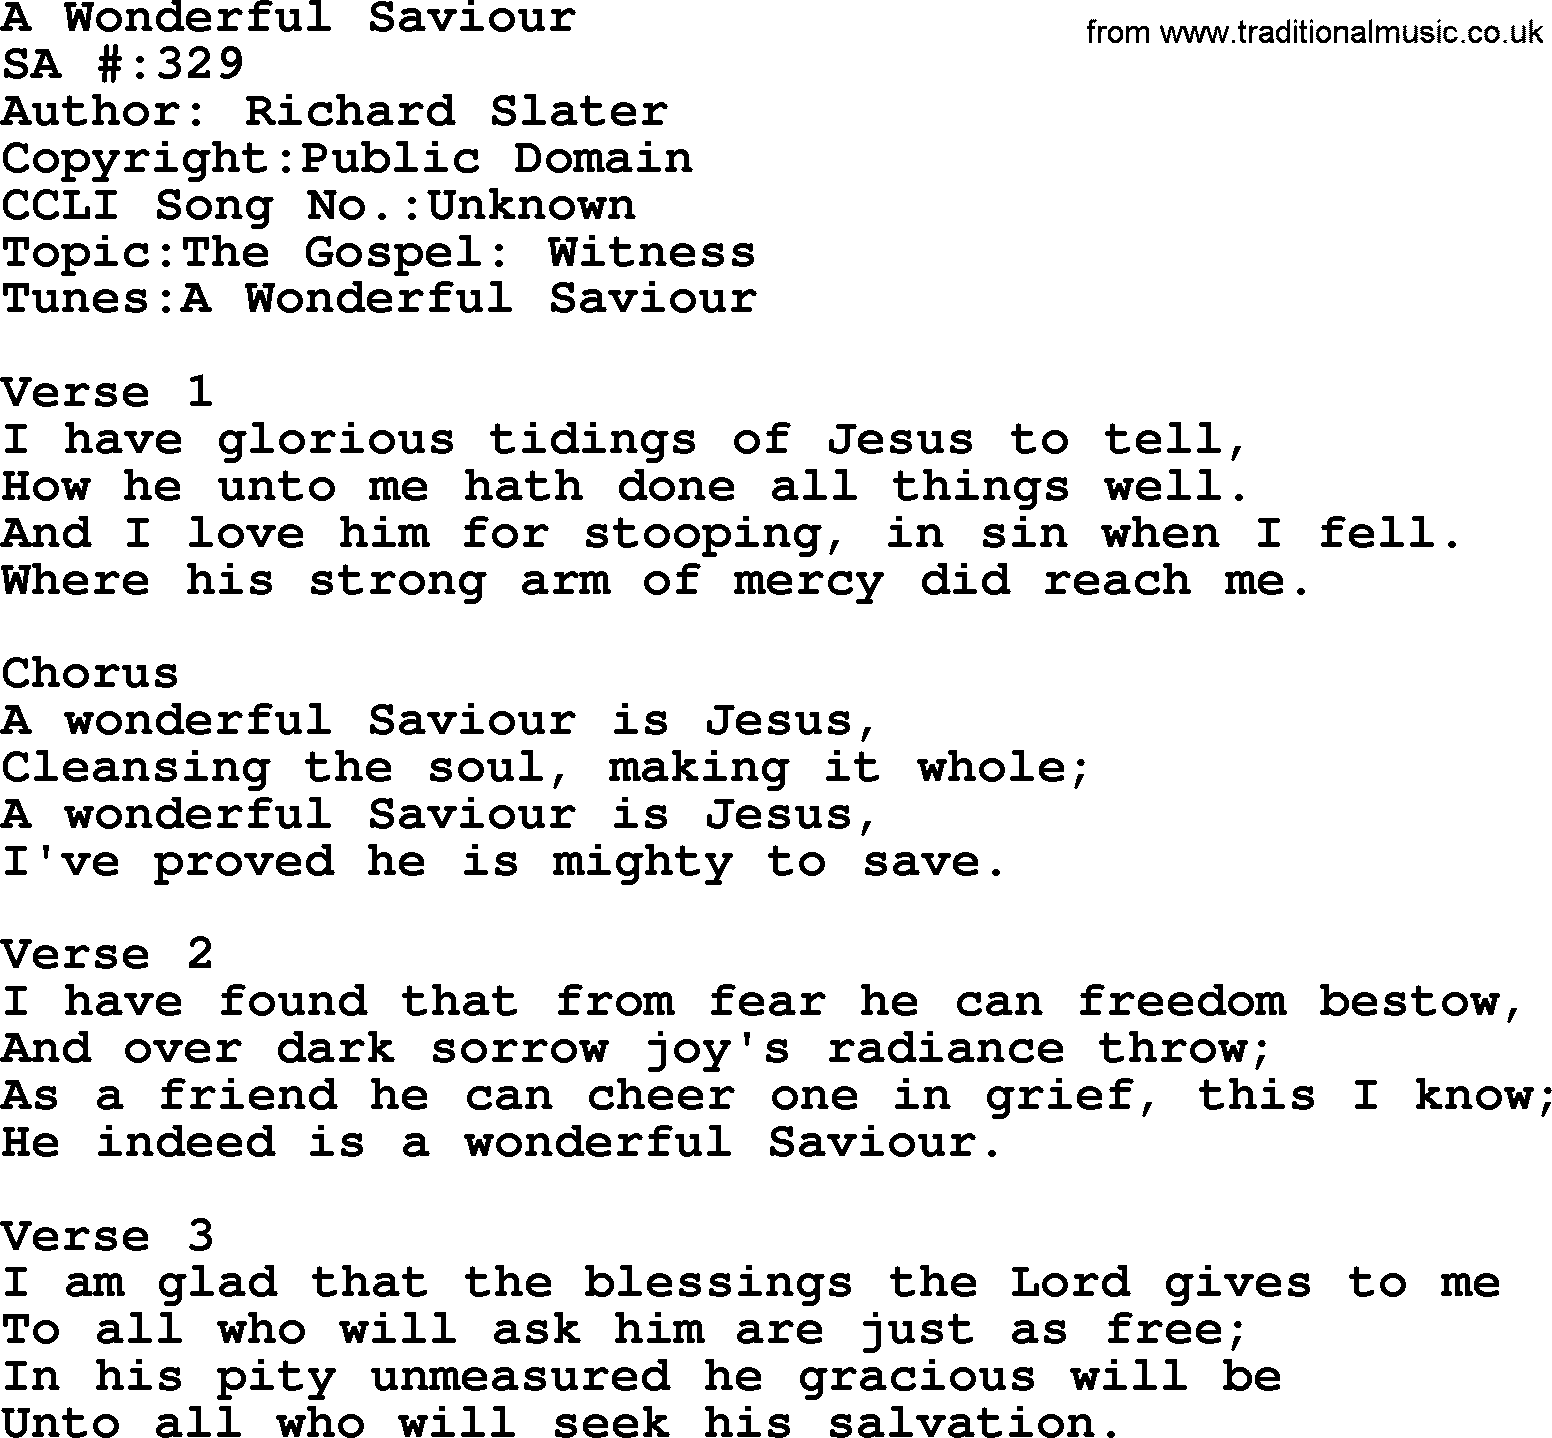 Salvation Army Hymnal, title: A Wonderful Saviour, with lyrics and PDF,